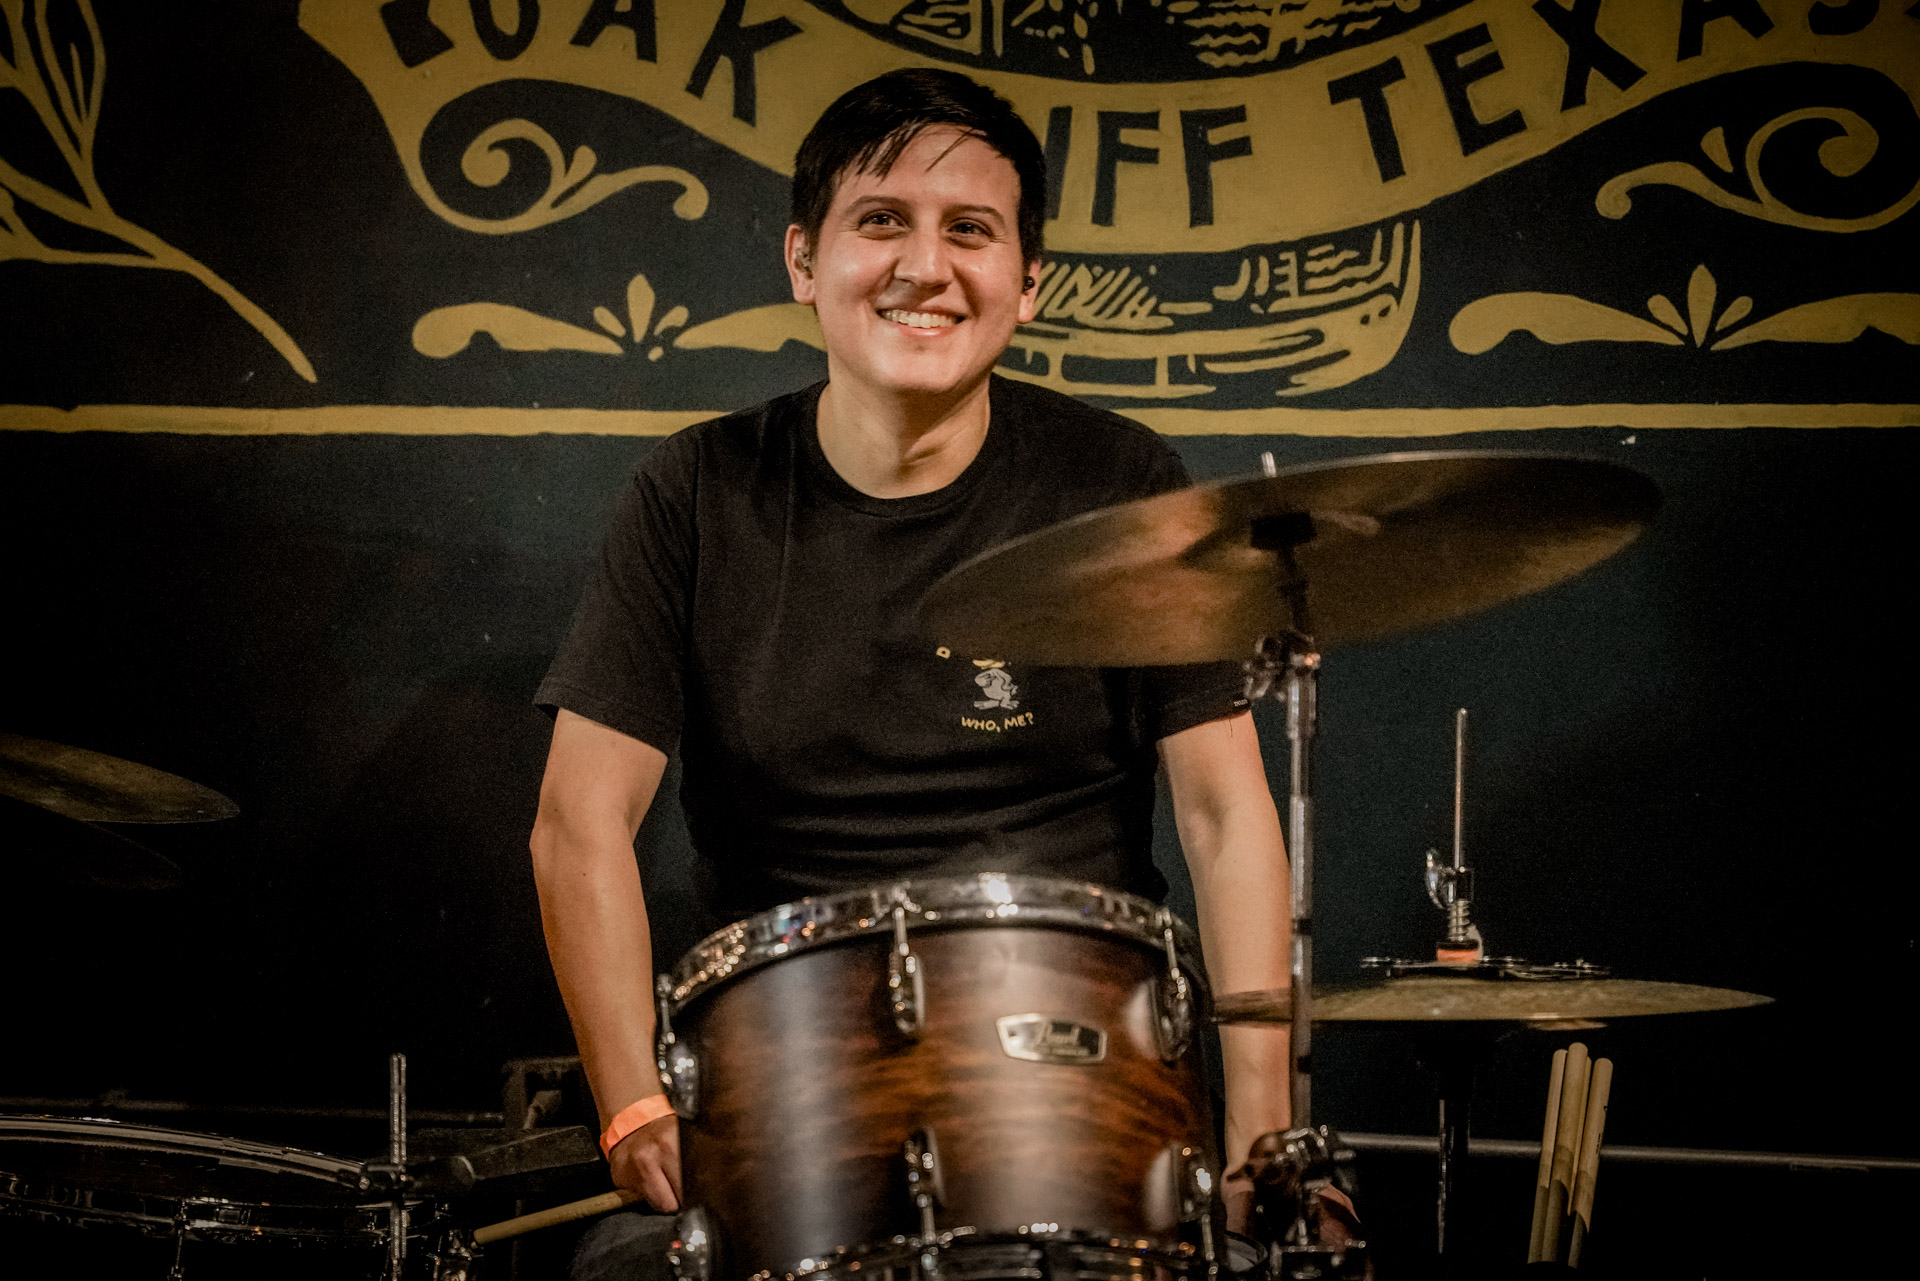 A drummer smiling